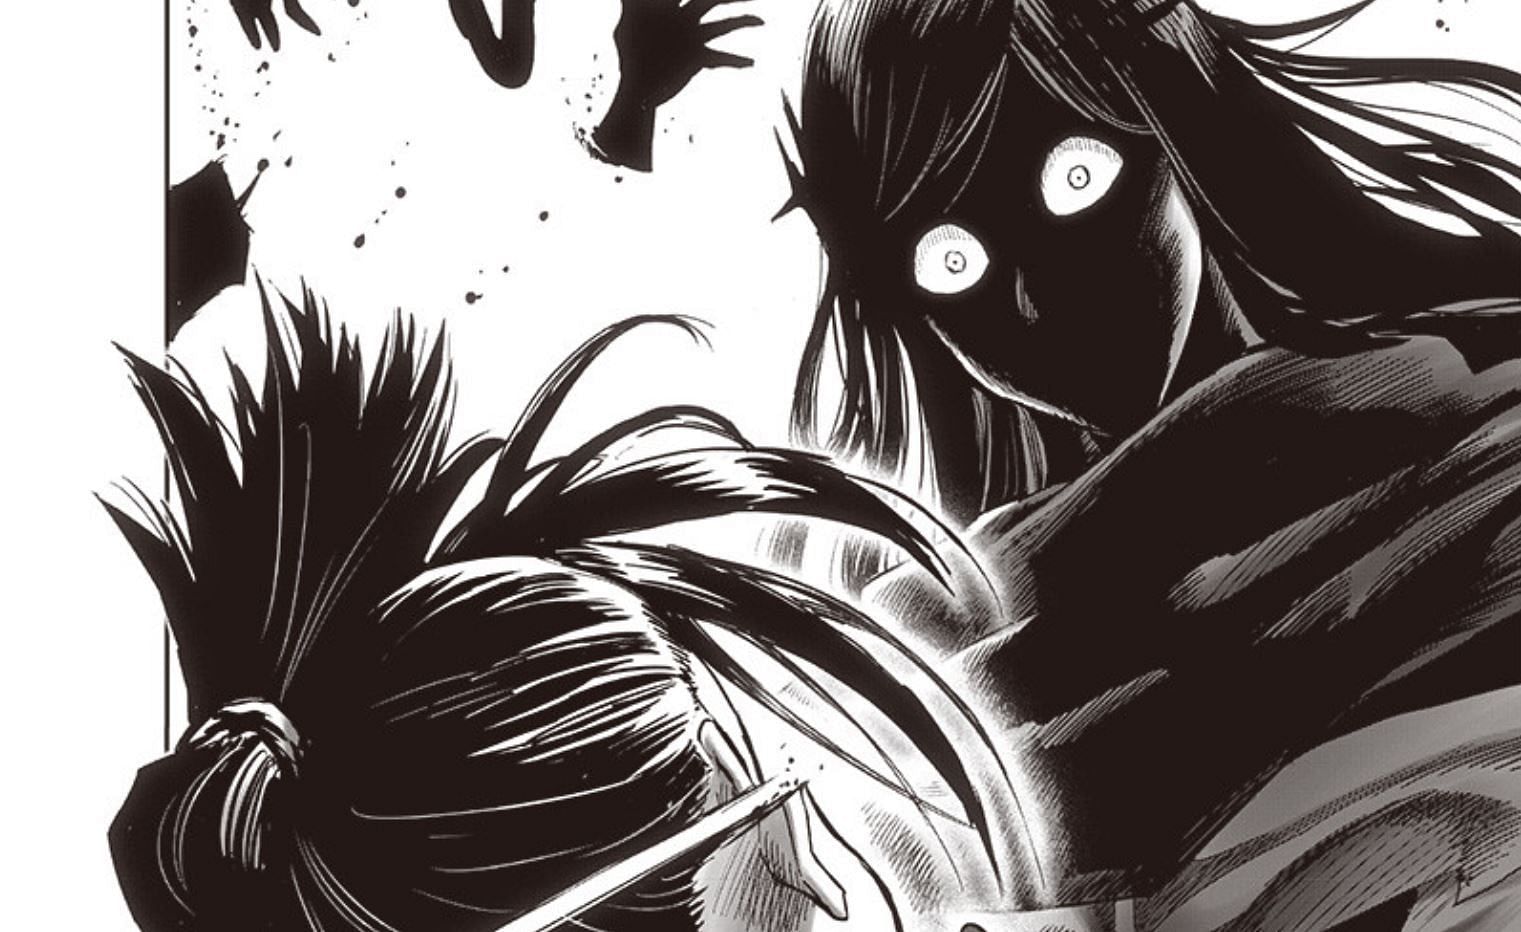 Flashy Flash as seen in One Punch Man Chapter 201 (Image via Shueisha)